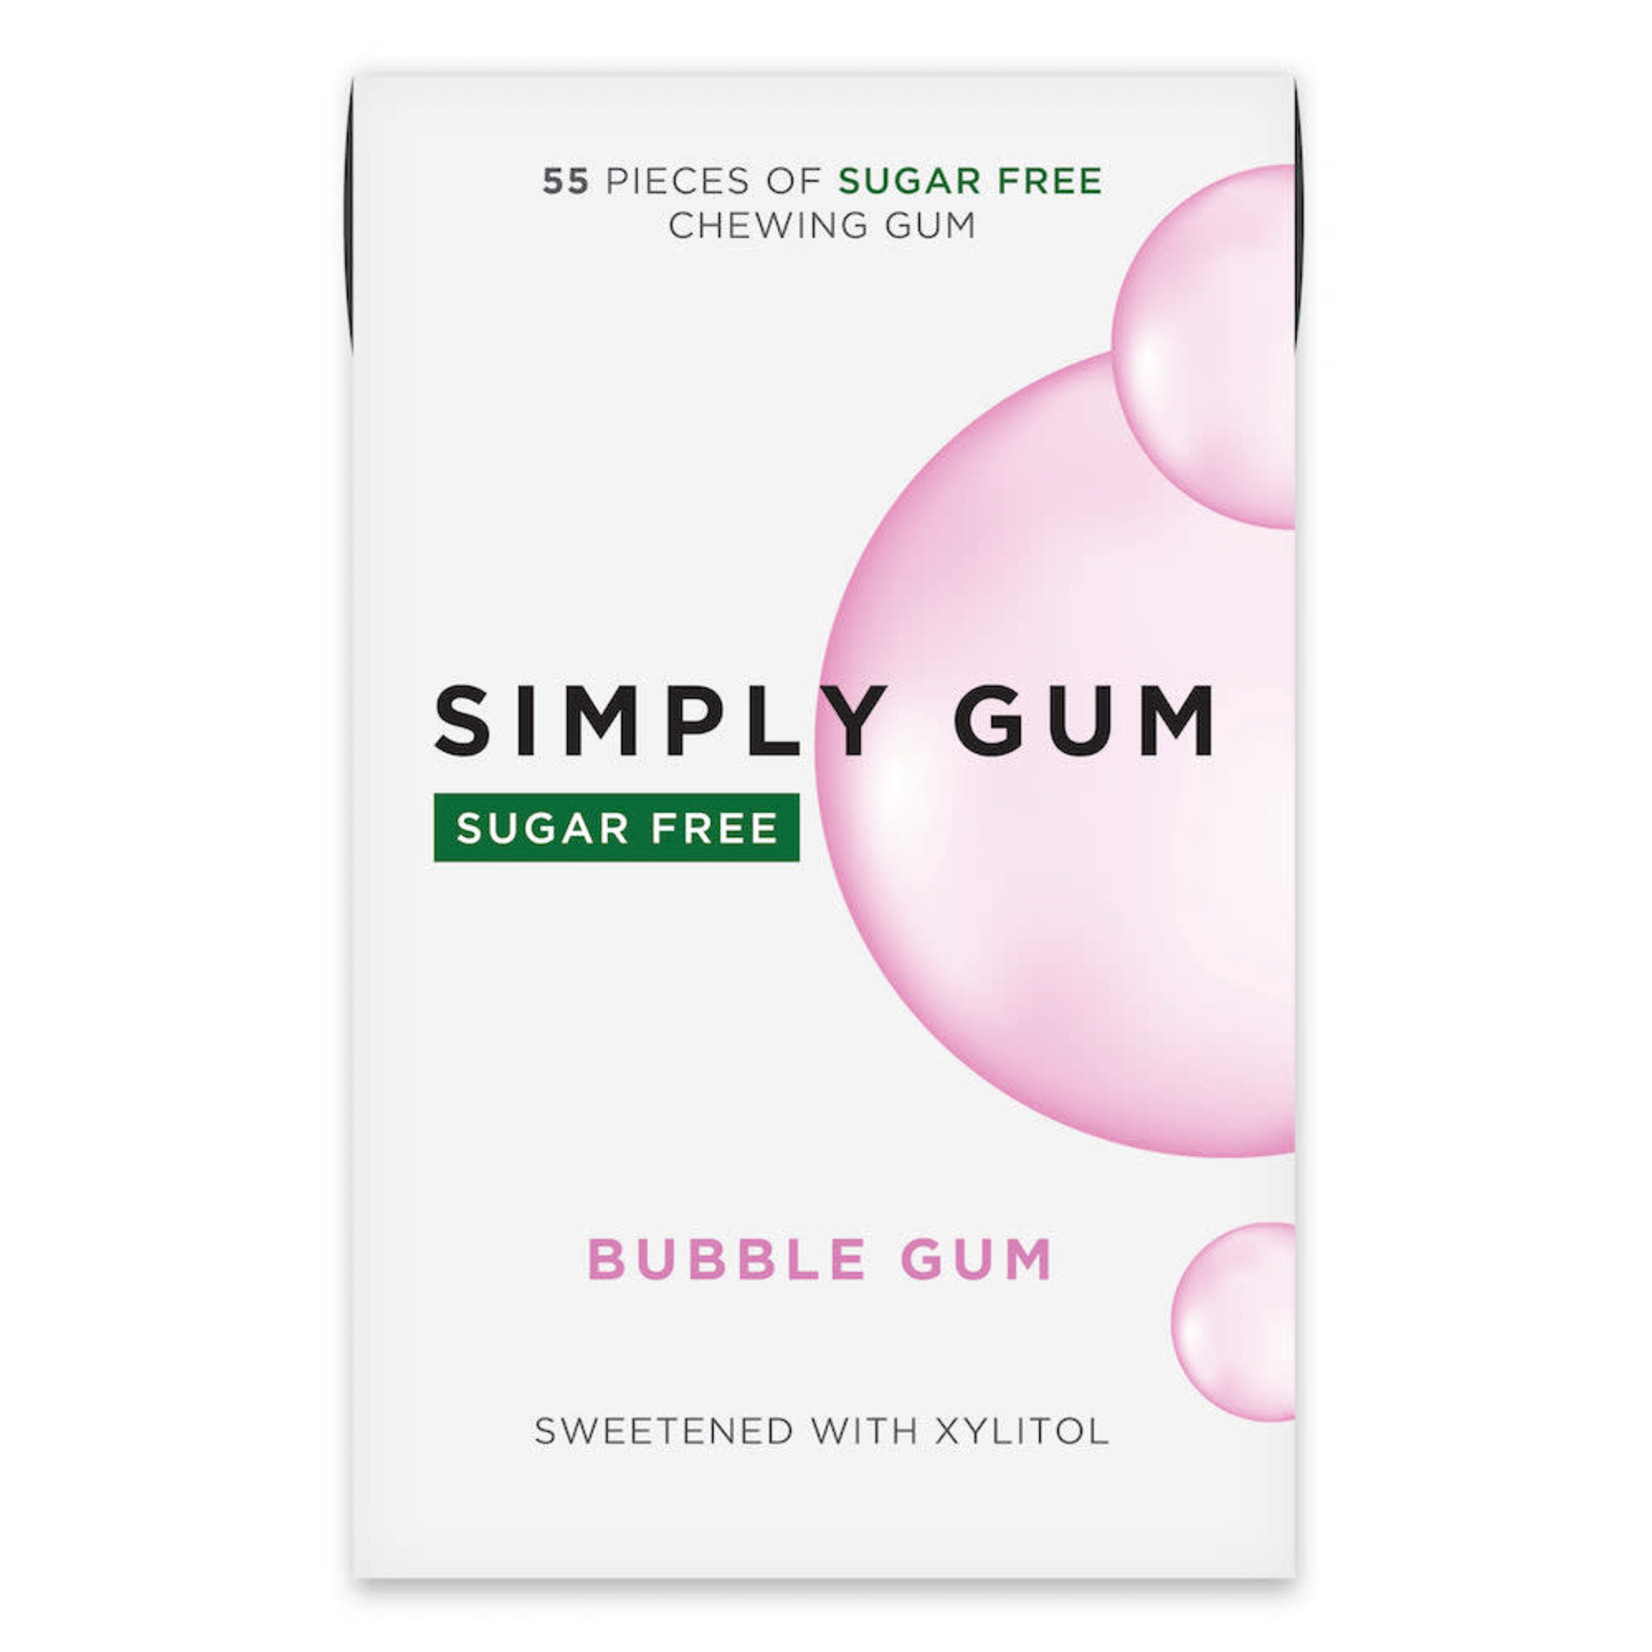 Simply Gum Simply Gum 55pcs large pack - Sugar Free Buble Gum